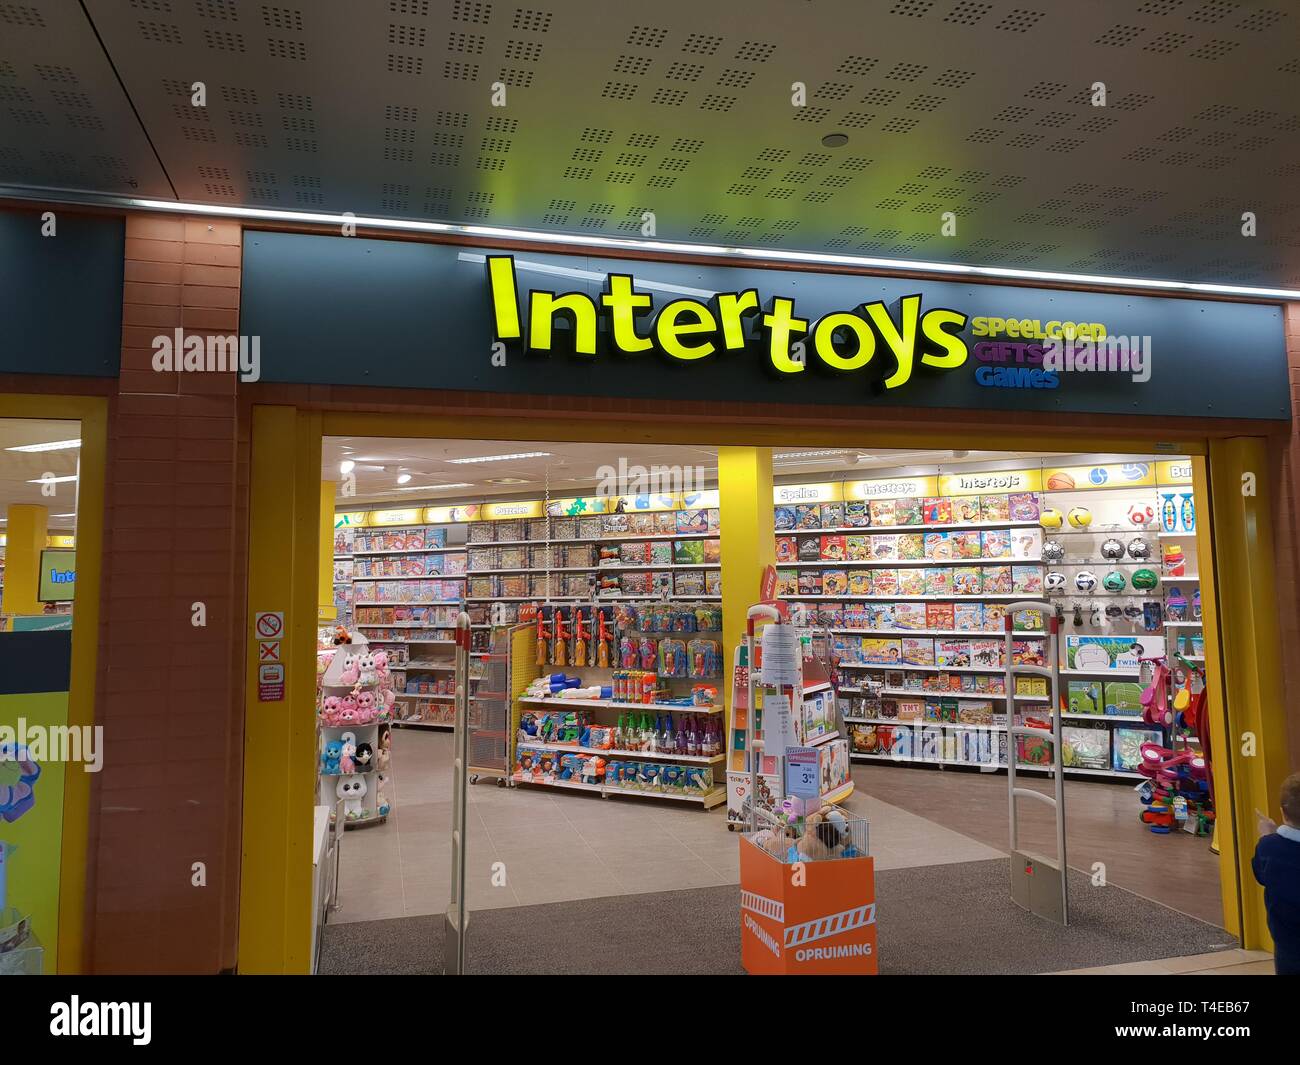 Shop for toys named Intertoys at mall in Nieuwerkerk aan den IJssel Stock  Photo - Alamy